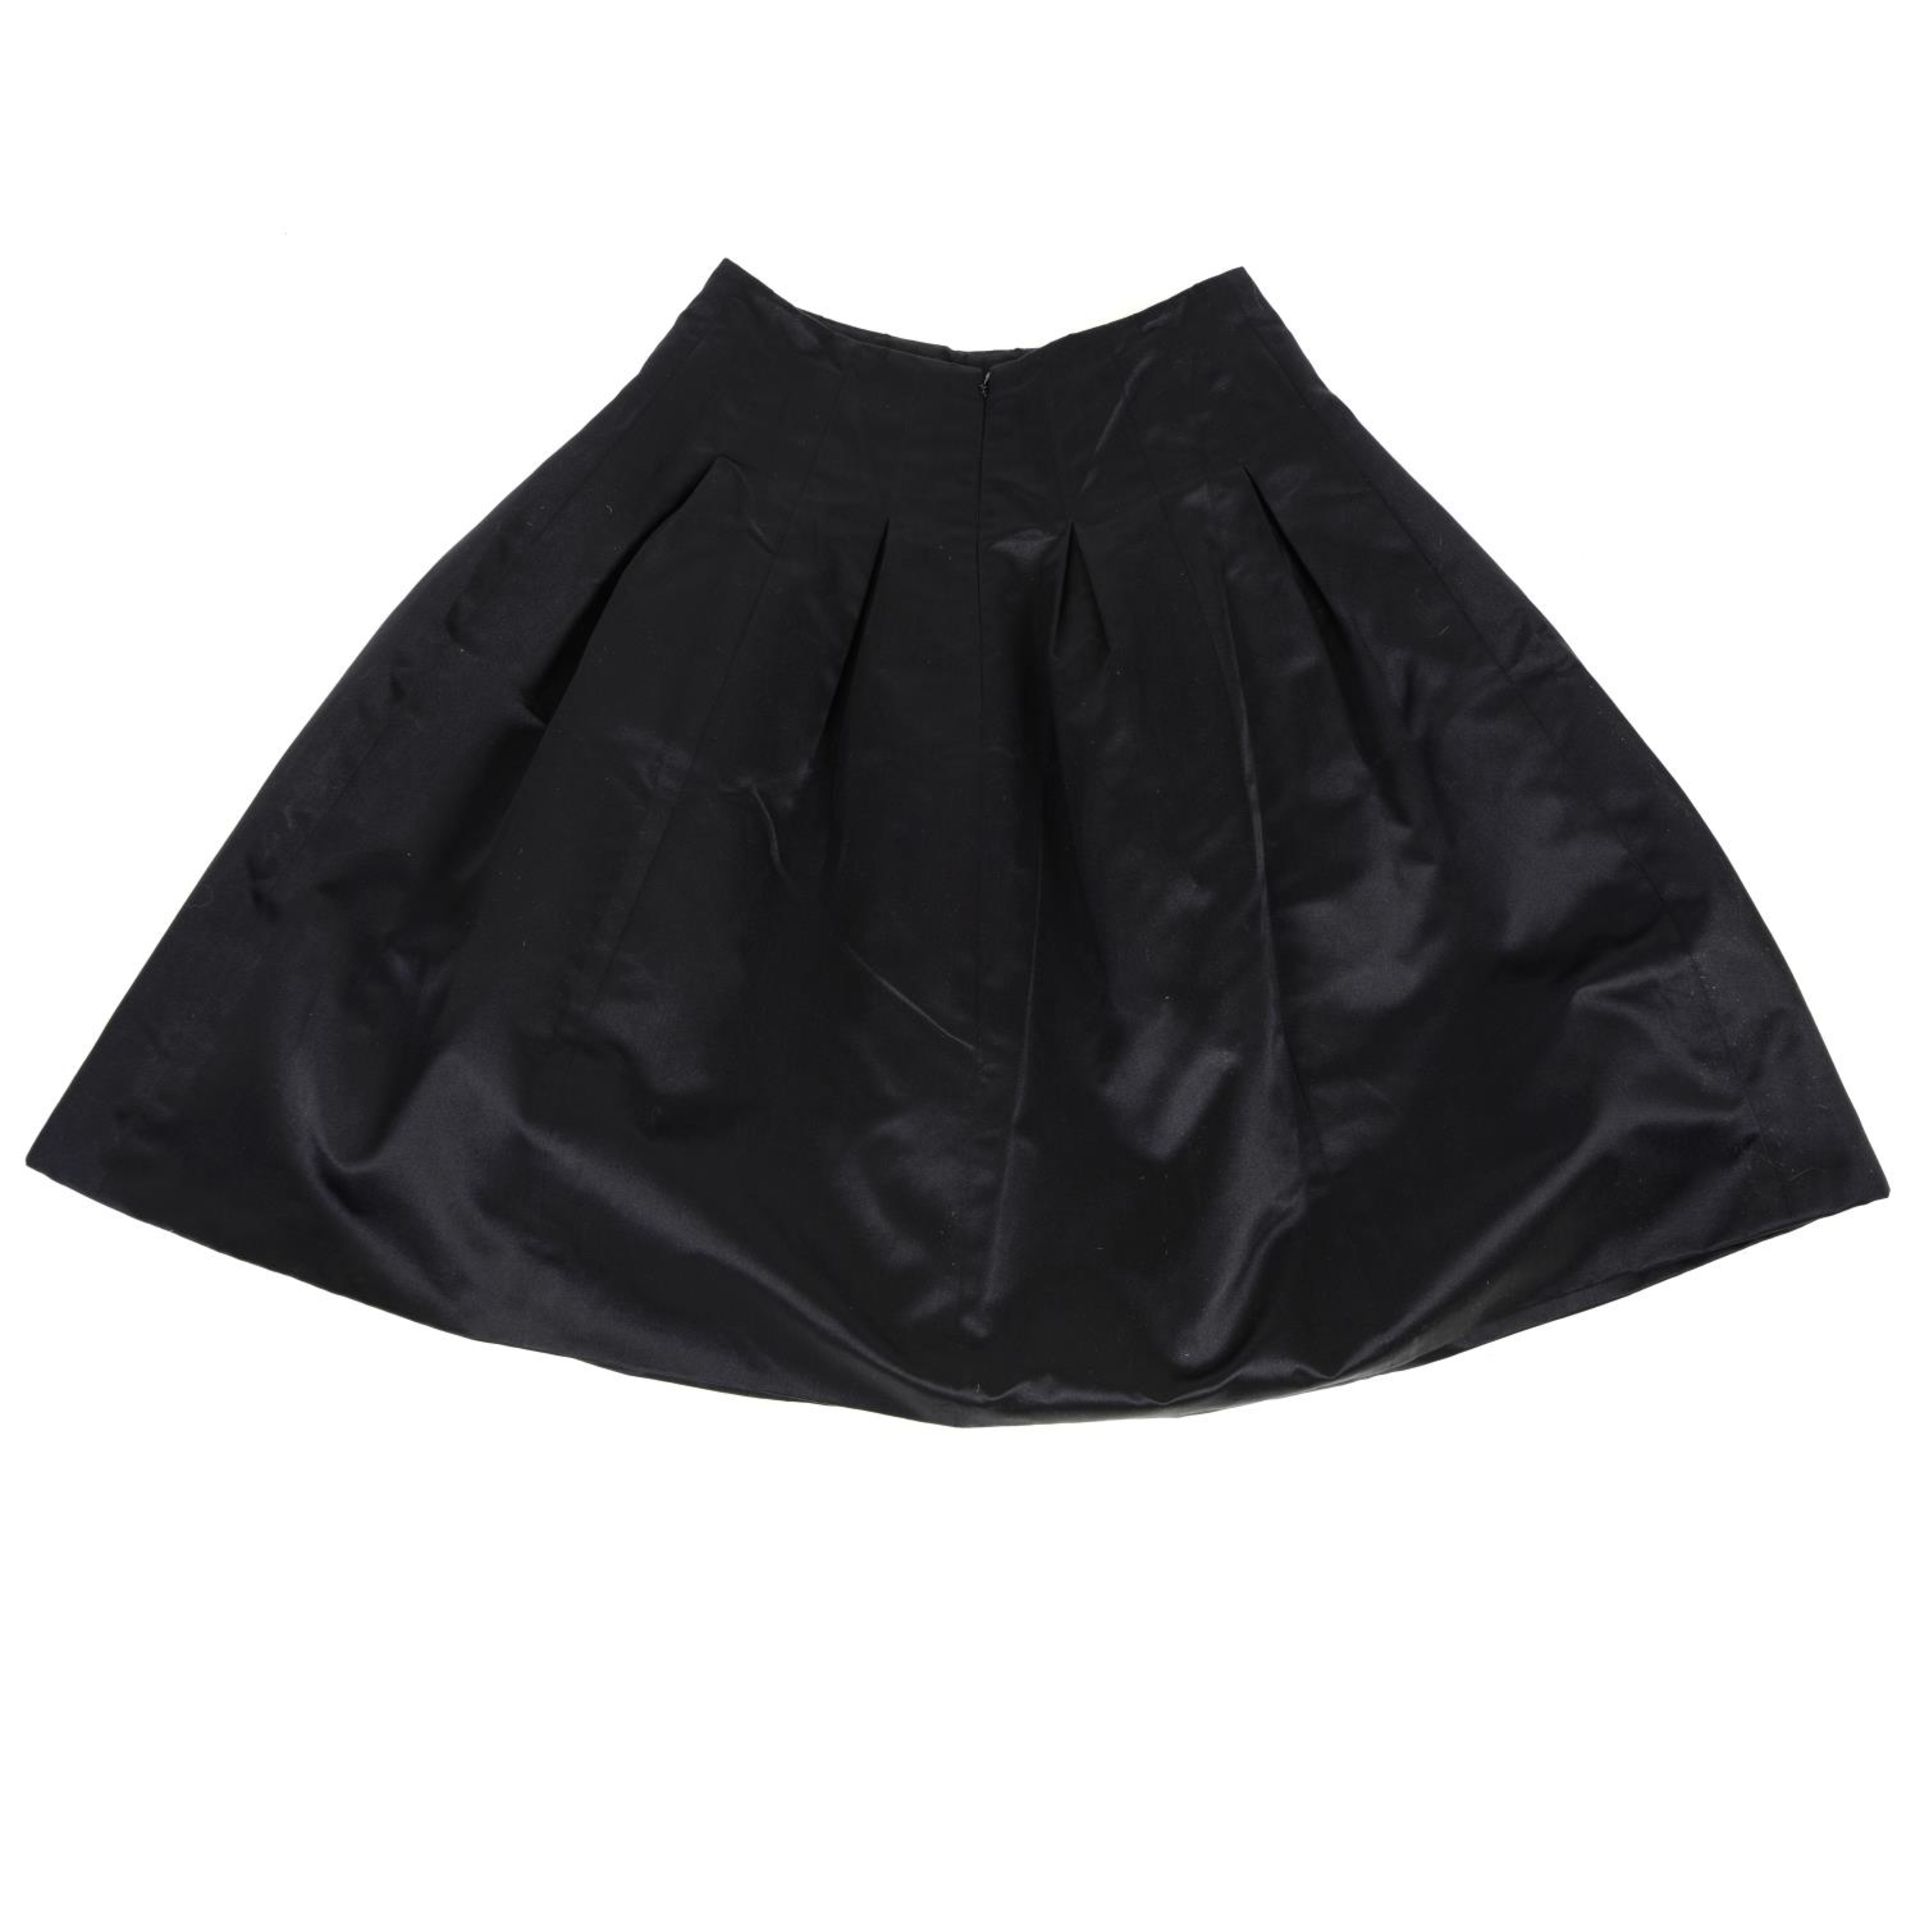 CHANEL - a black silk blend skirt. - Image 2 of 3